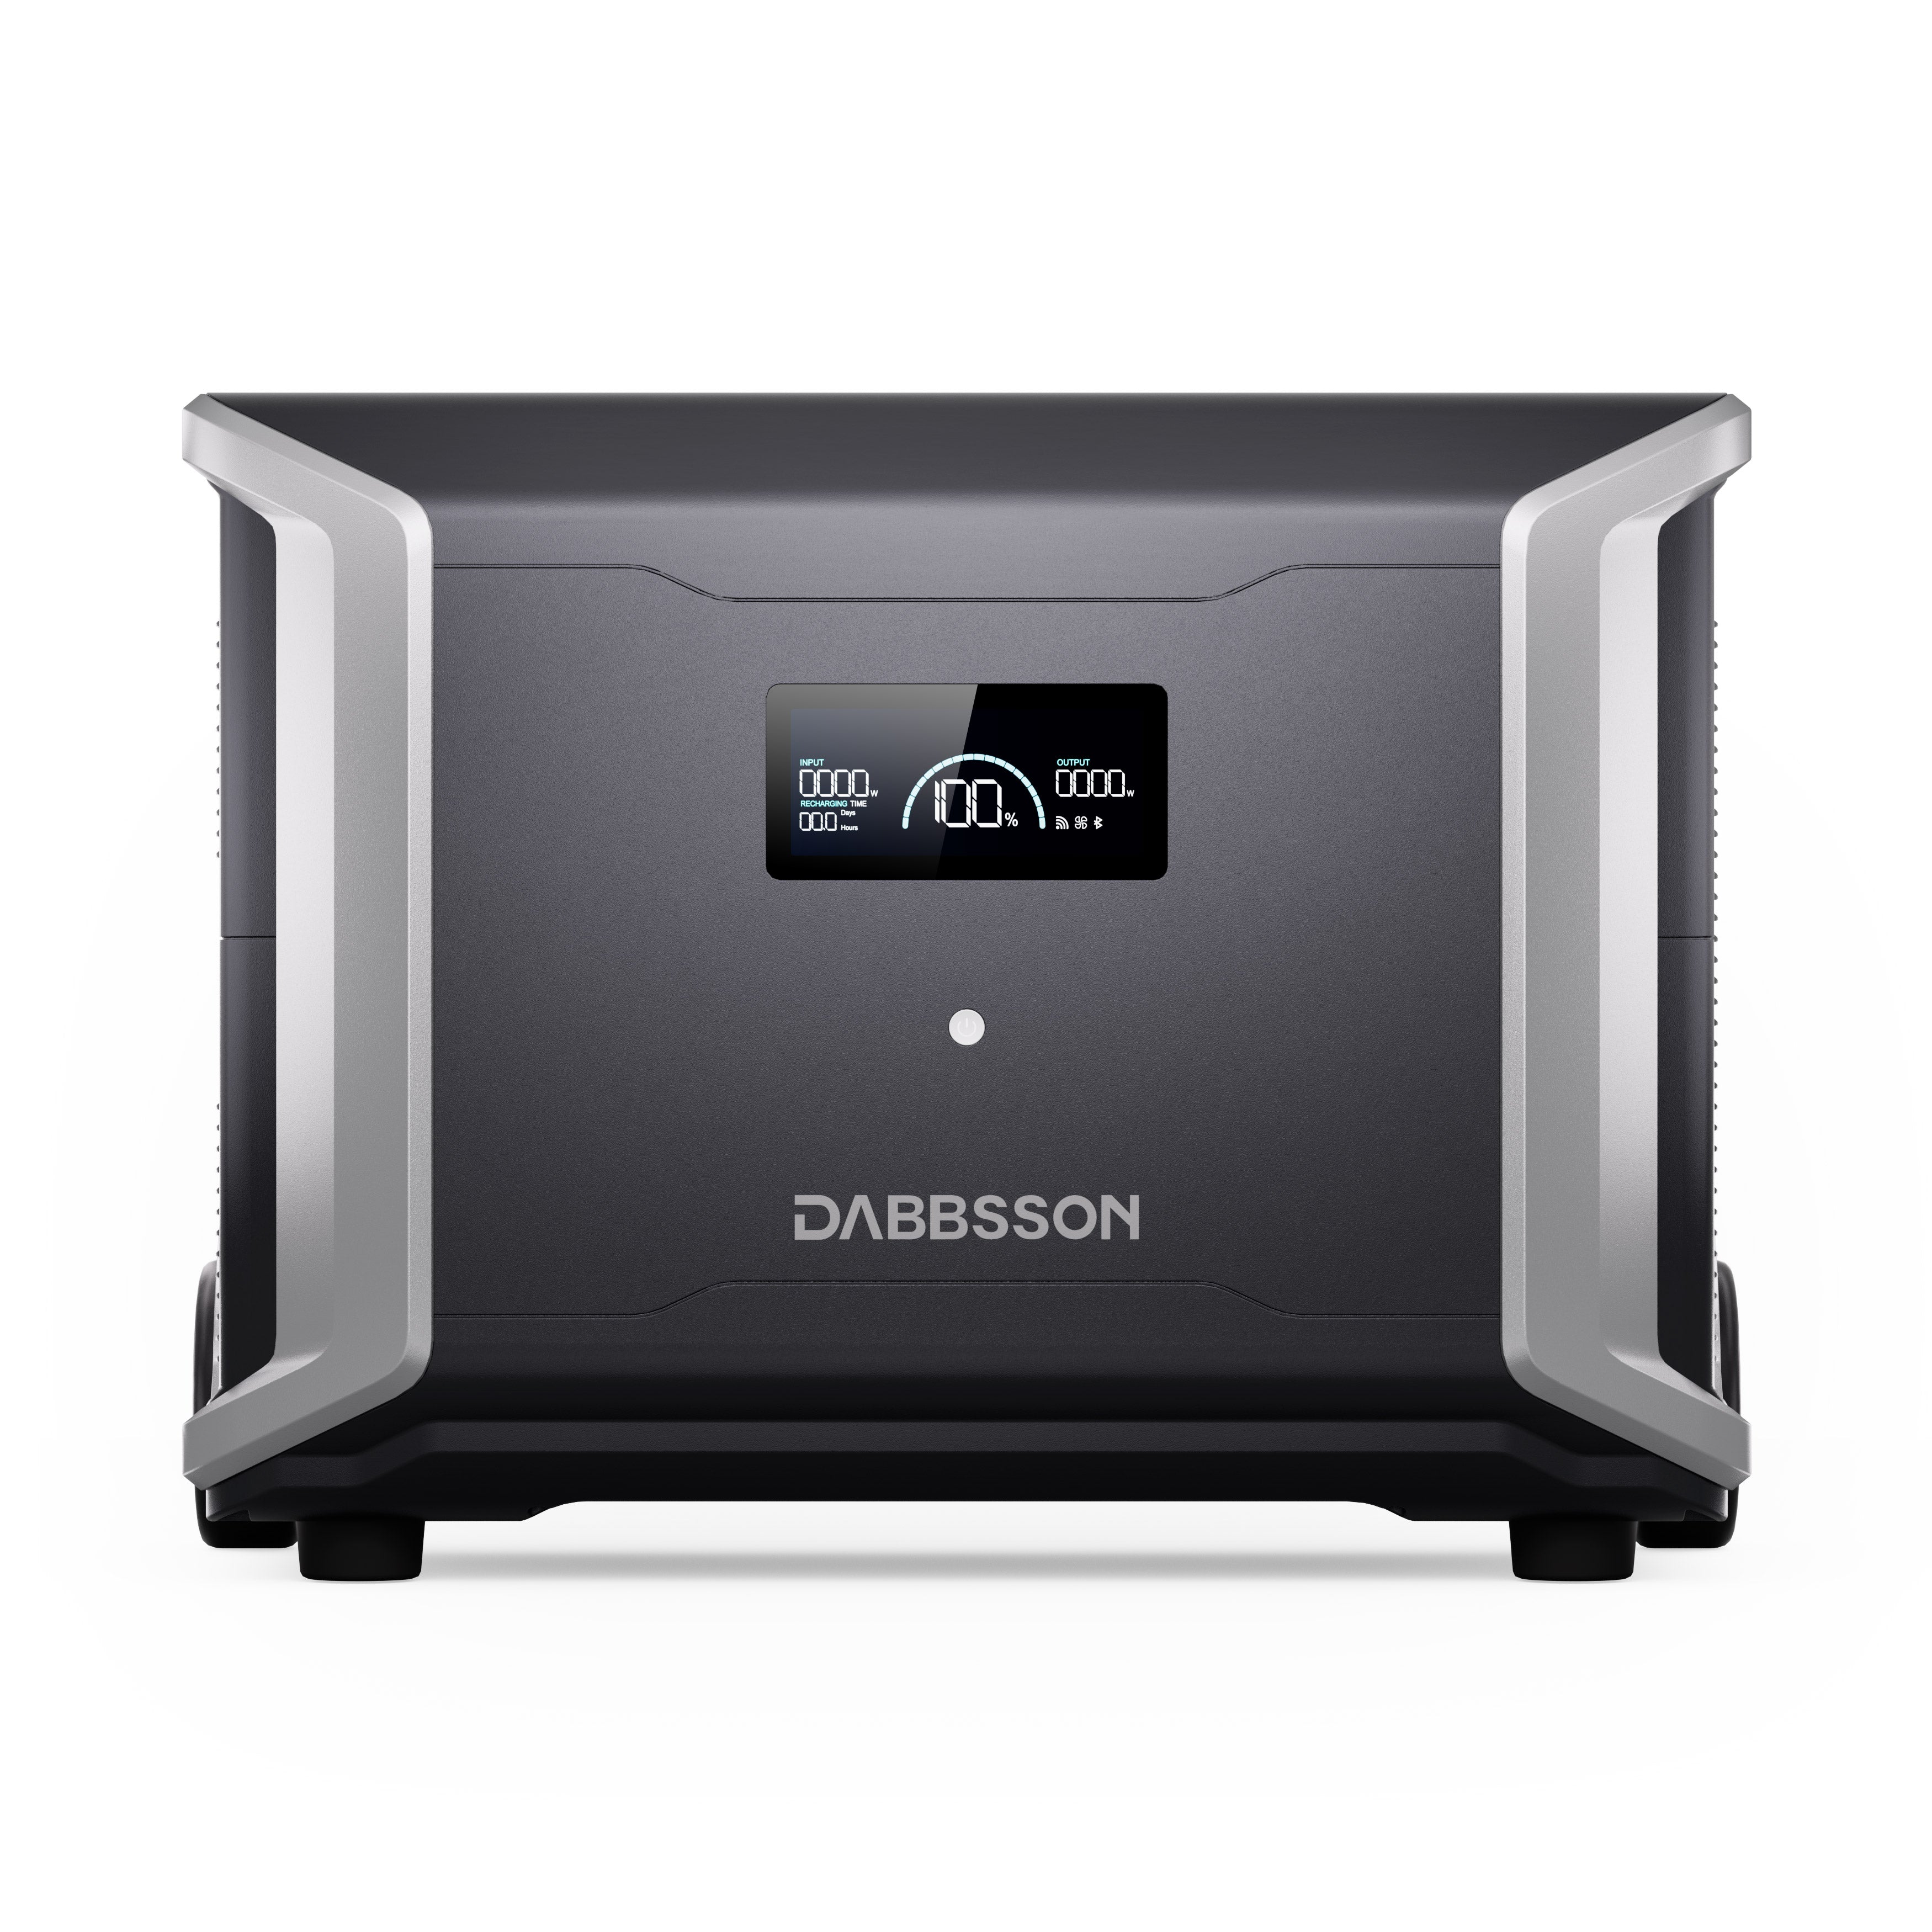 Dabbsson DBS3500 Solar Generator